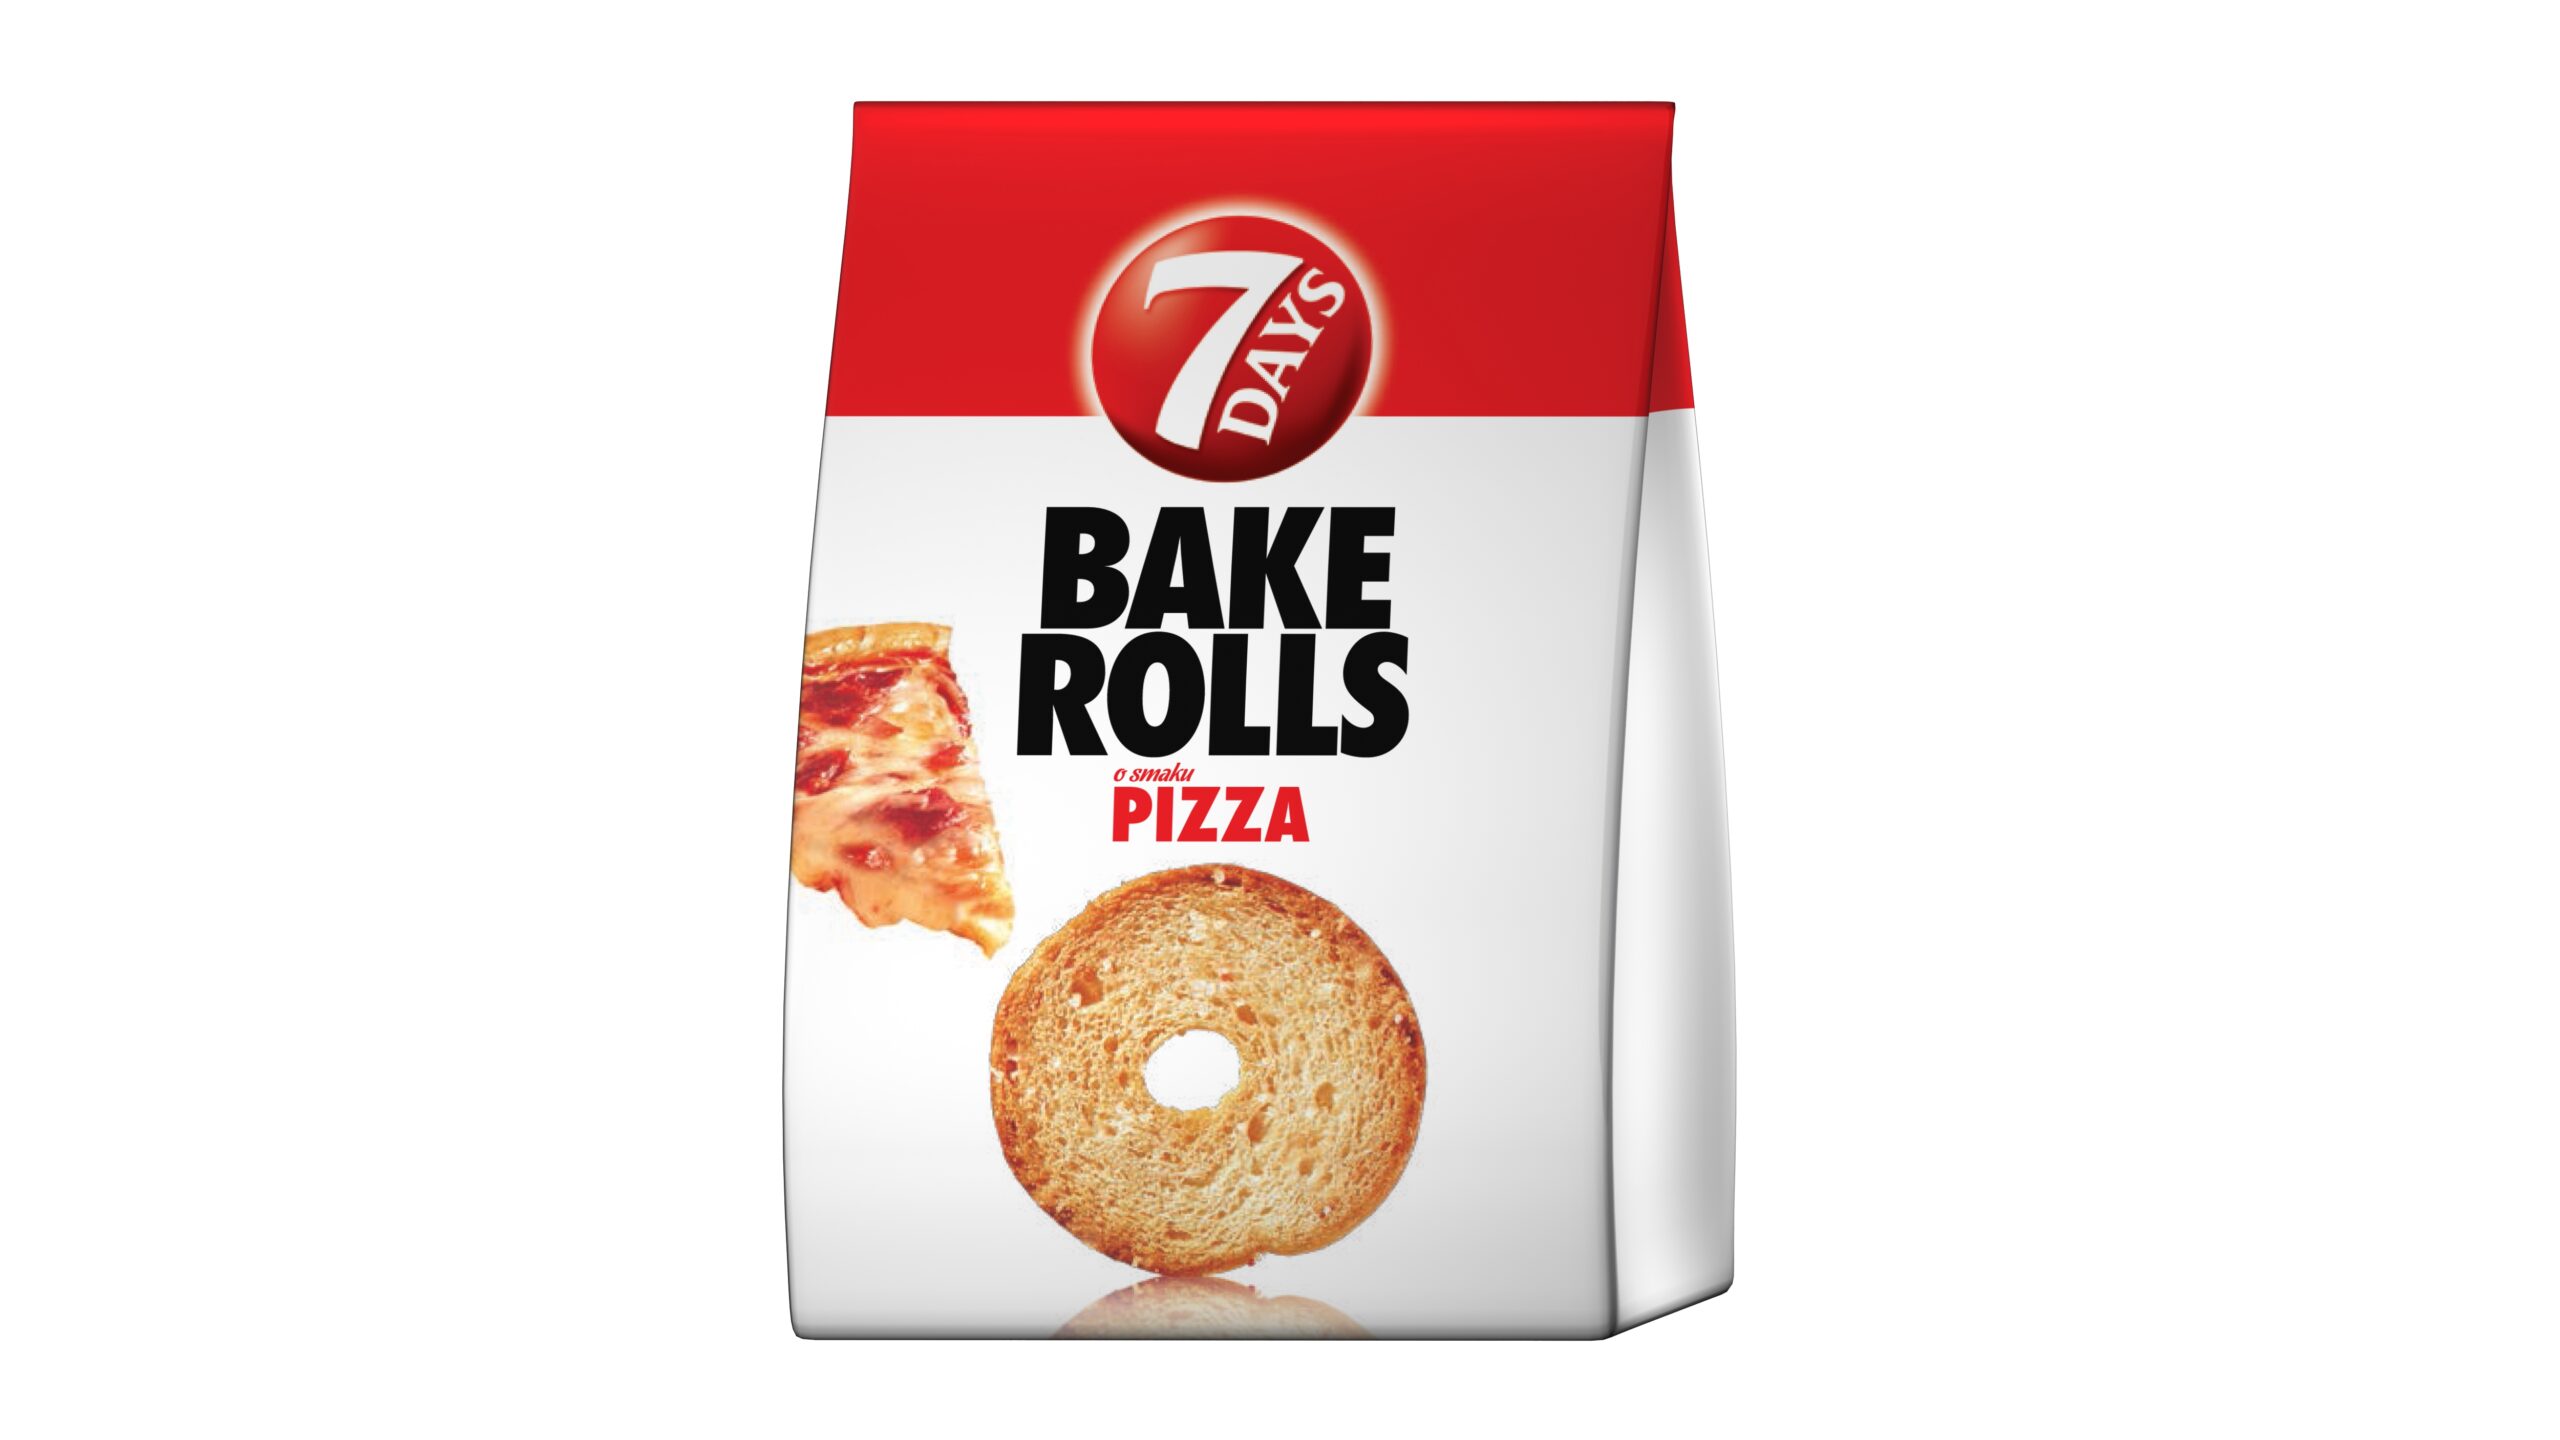 7 Days Bake Rolls Pizza 150g